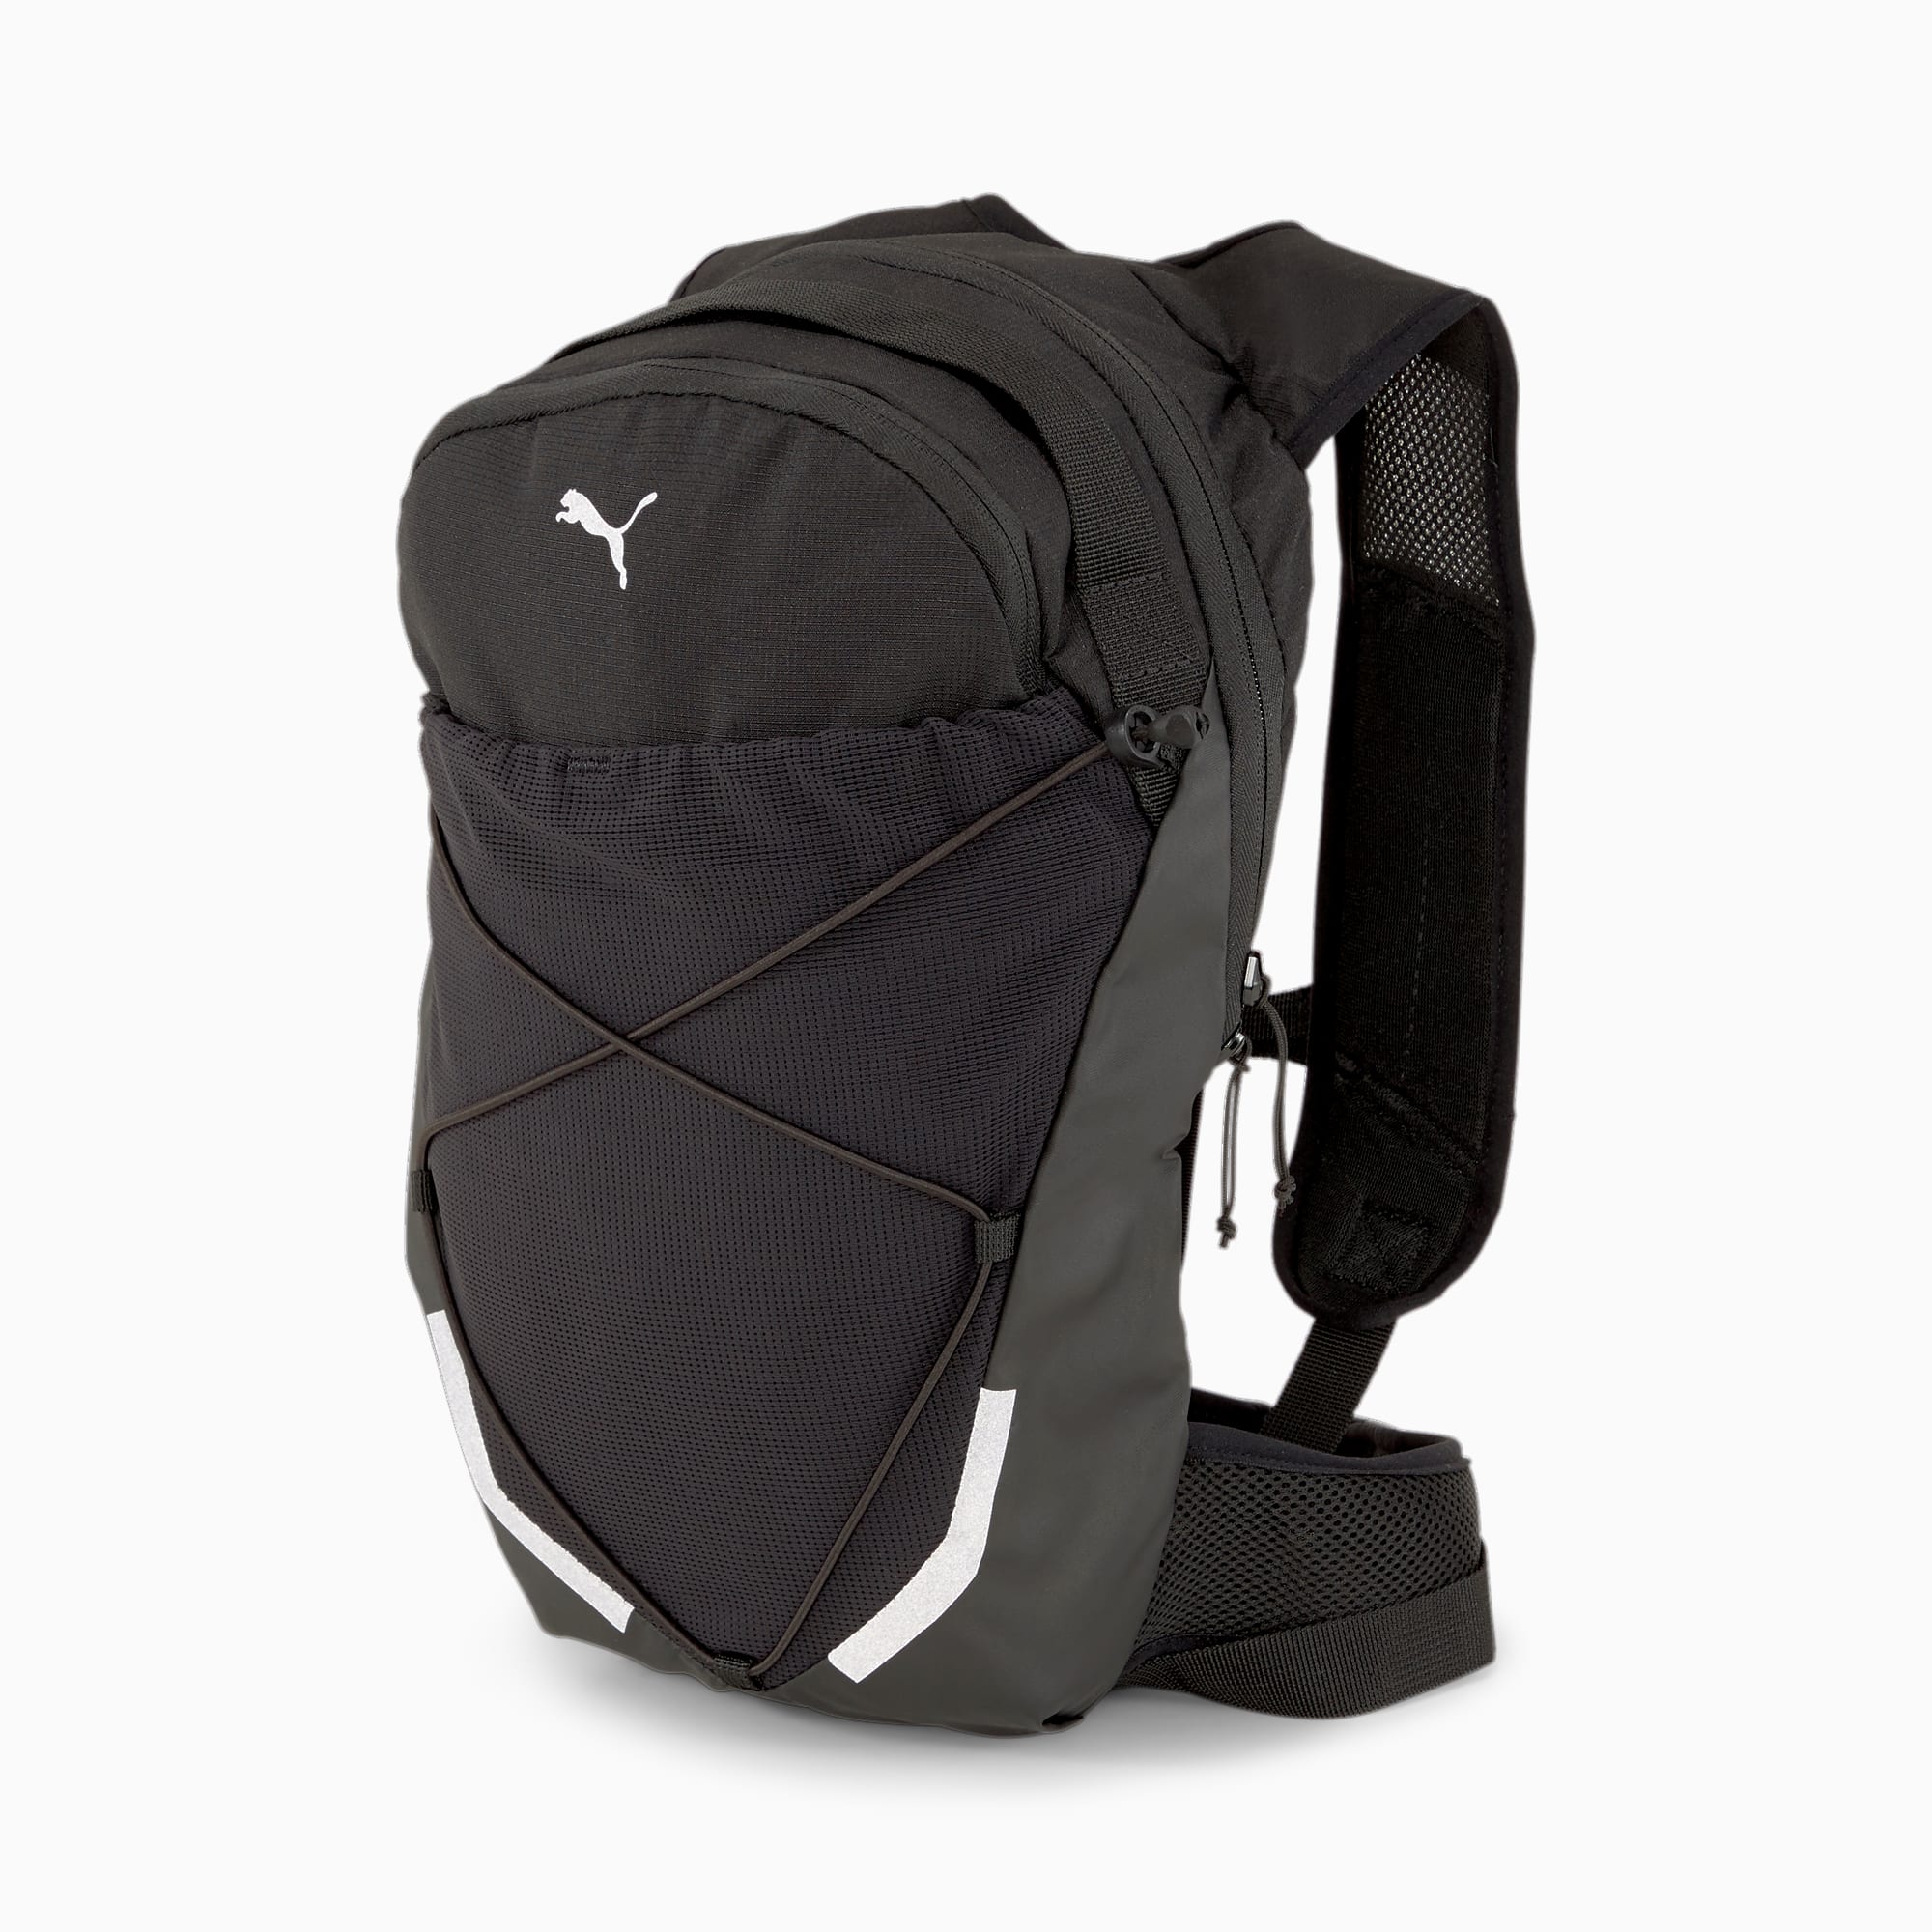 puma athletic backpack